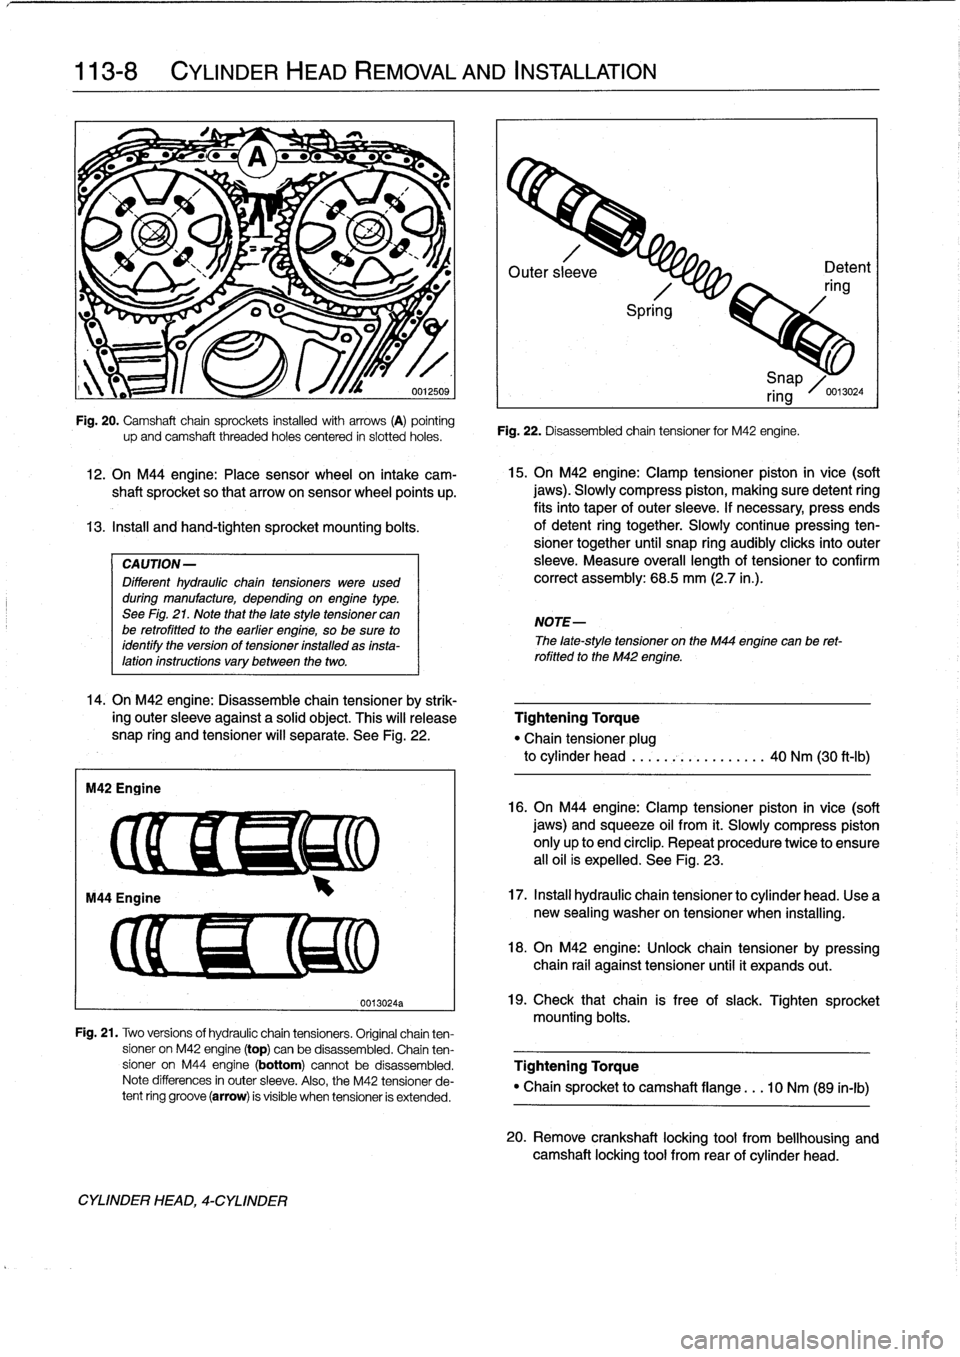 BMW 328i 1994 E36 Workshop Manual 
113-8

	

CYLINDER
HEAD
REMOVAL
AND
INSTALLATION

IW?
-
L
/~f
W

	

~
4r

"

-
"

	

;,s
1

12
.
On
M44
engine
:
Place
sensor
wheel
on
intake
cam-
shaft
sprocket
so
that
arrowon
sensor
wheel
points
